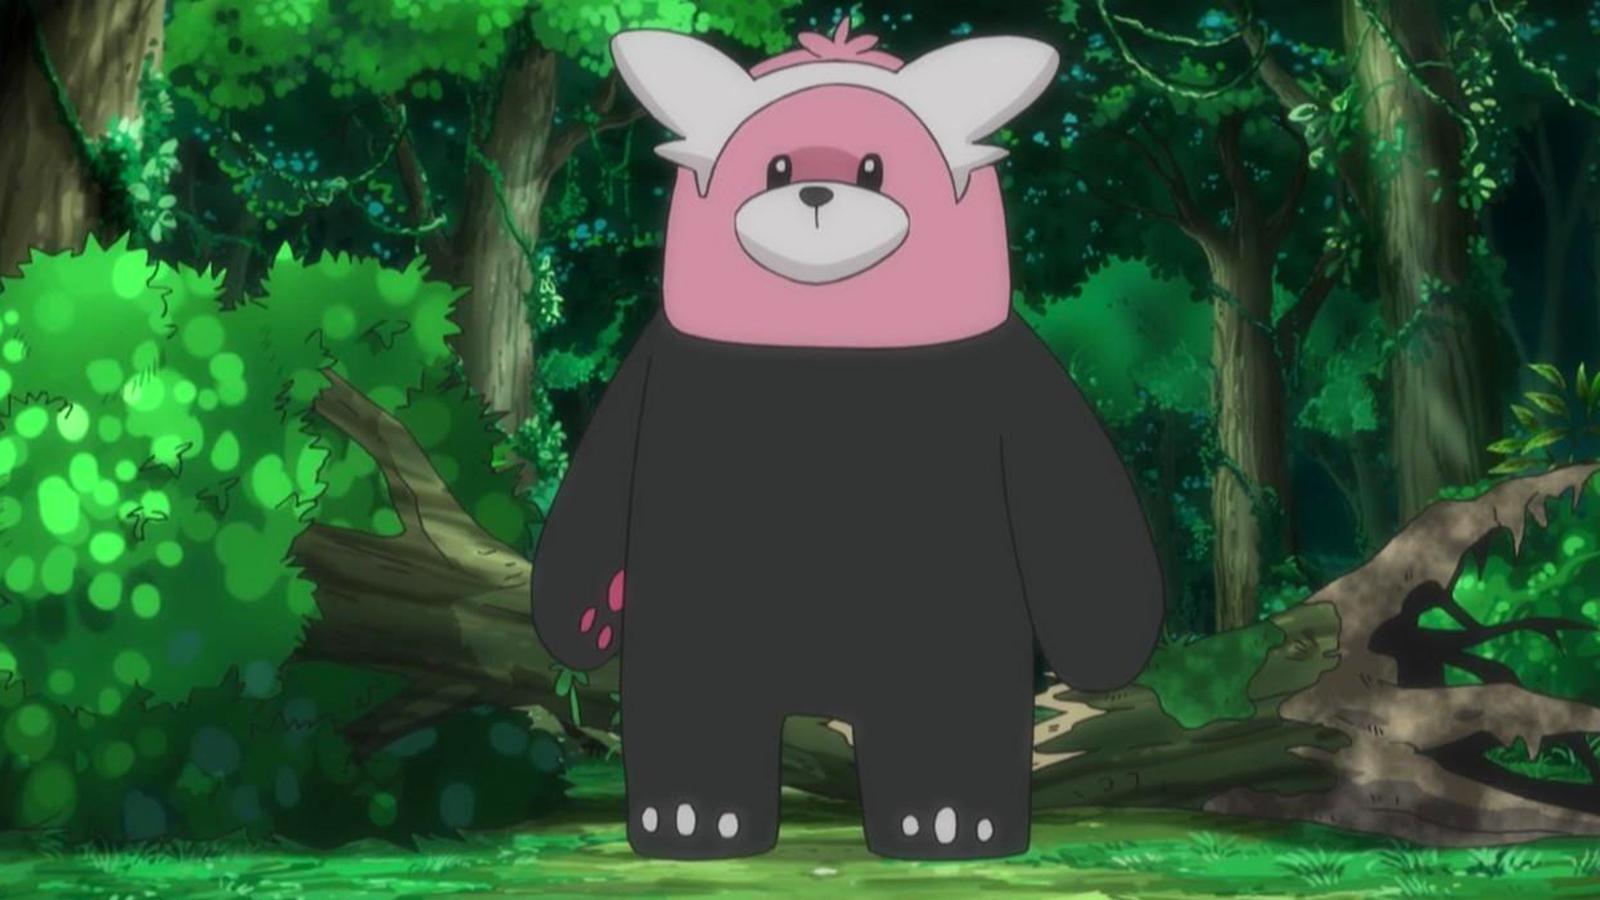 Bewear appearing in the Pokemon anime